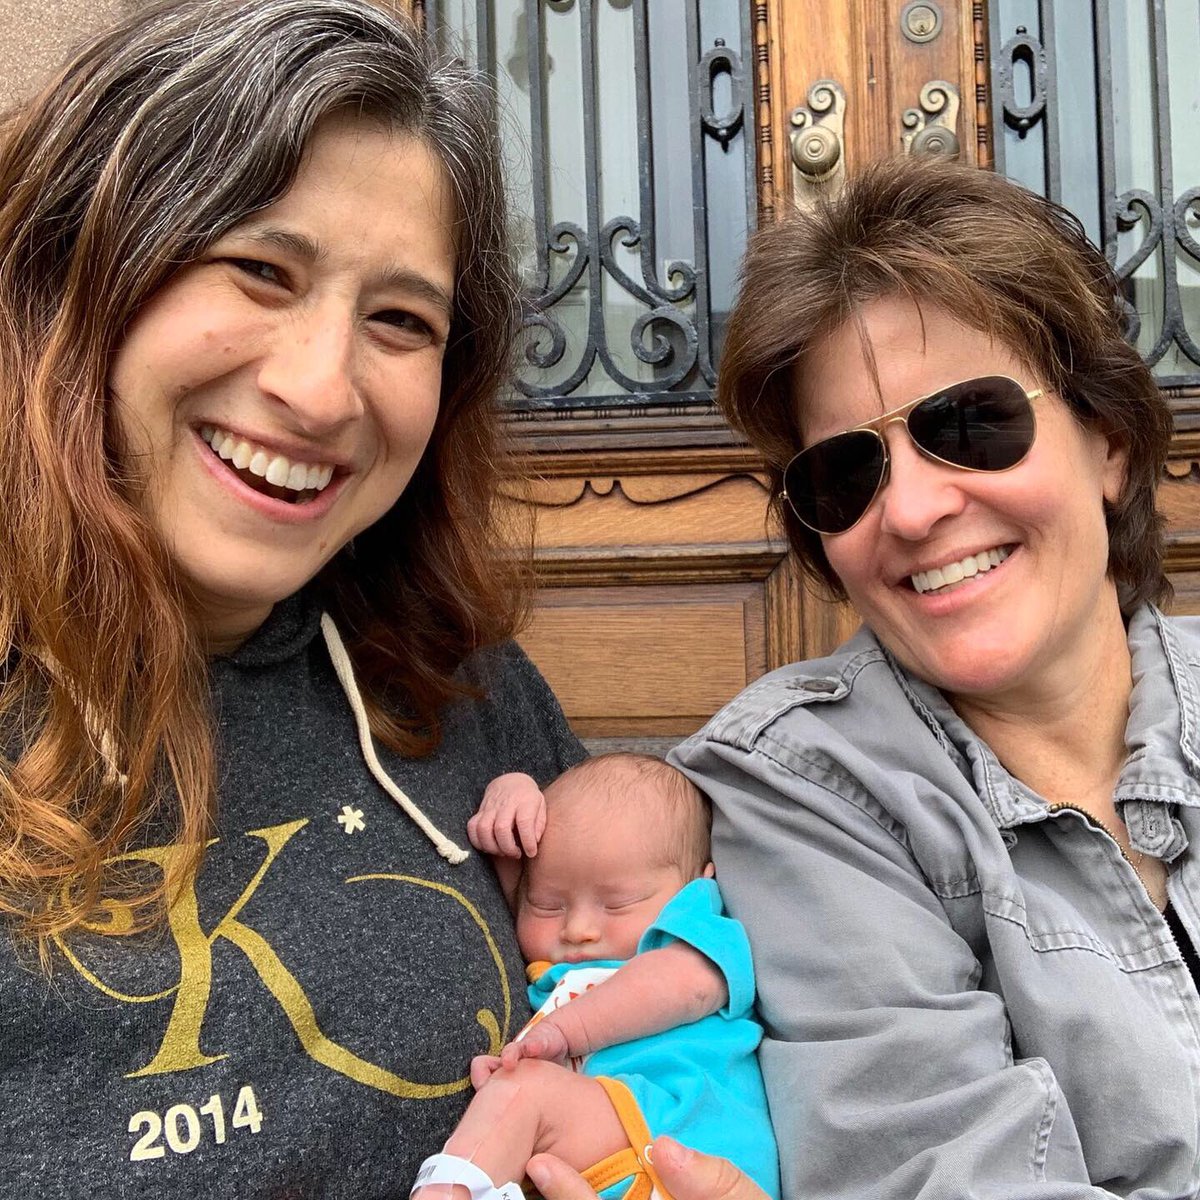 Amanda Katz on Twitter together with Kara Swisher and their baby Clara Jo Swisher Katz 